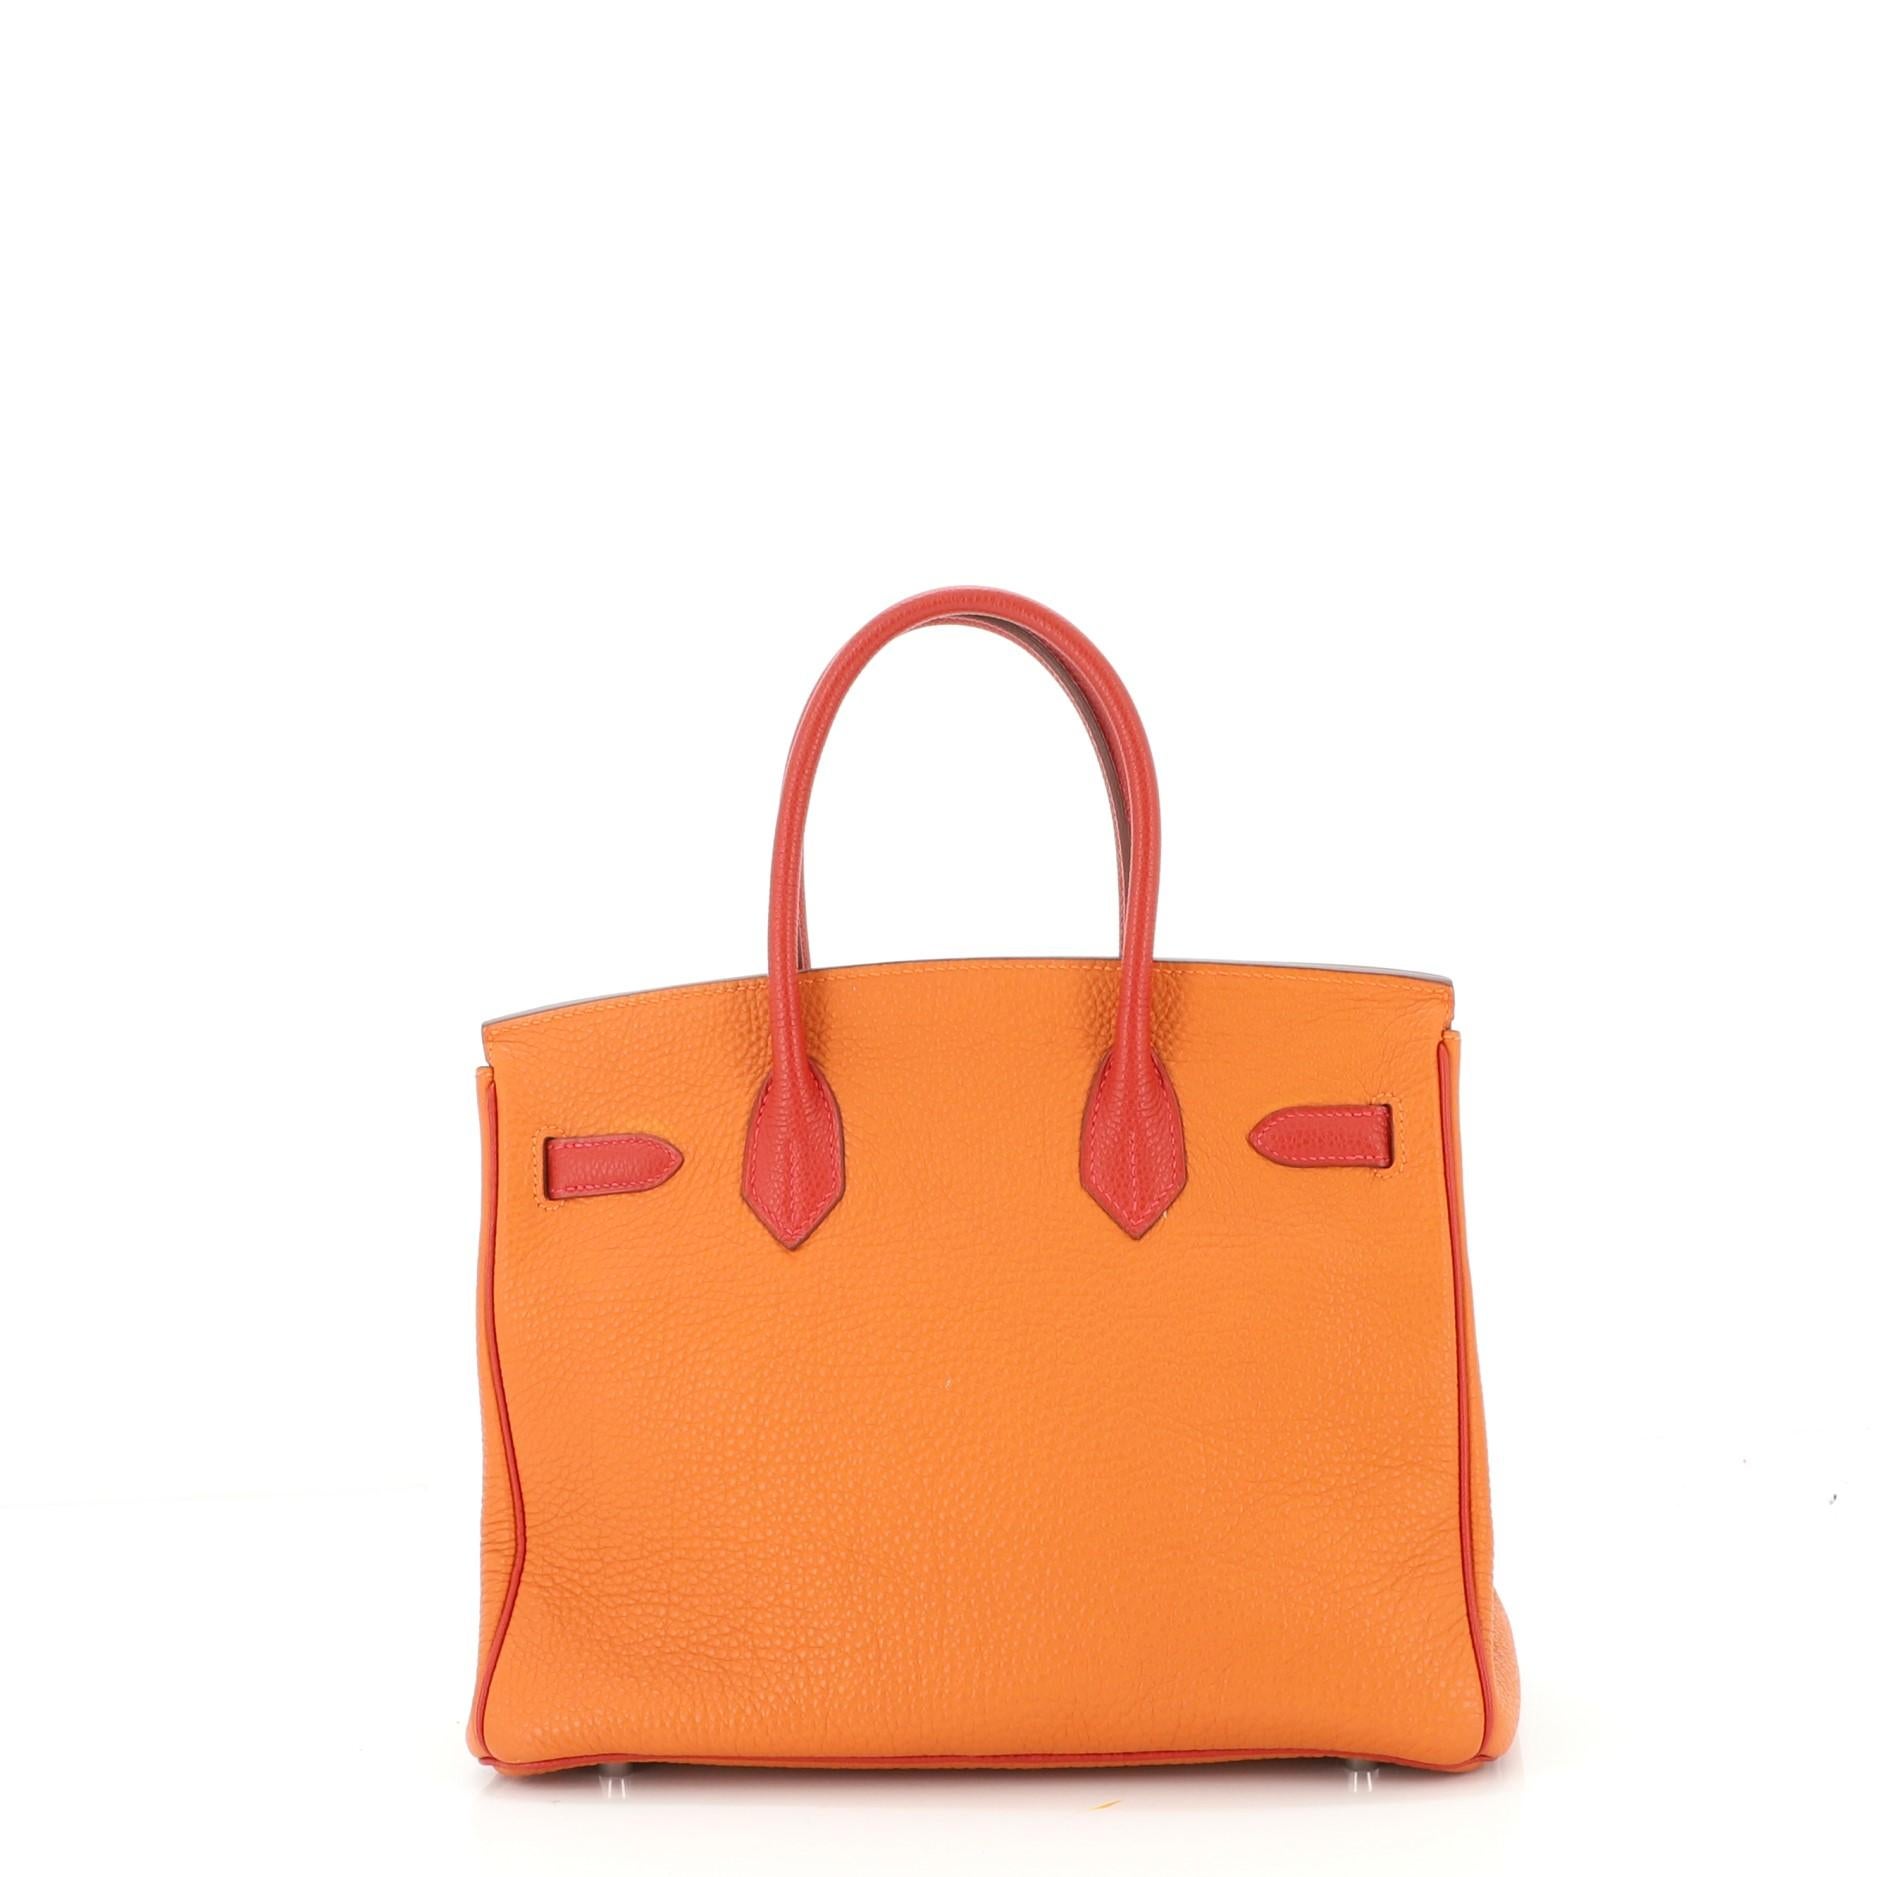 Orange Hermes Birkin Handbag Bicolor Togo with Palladium Hardware 30